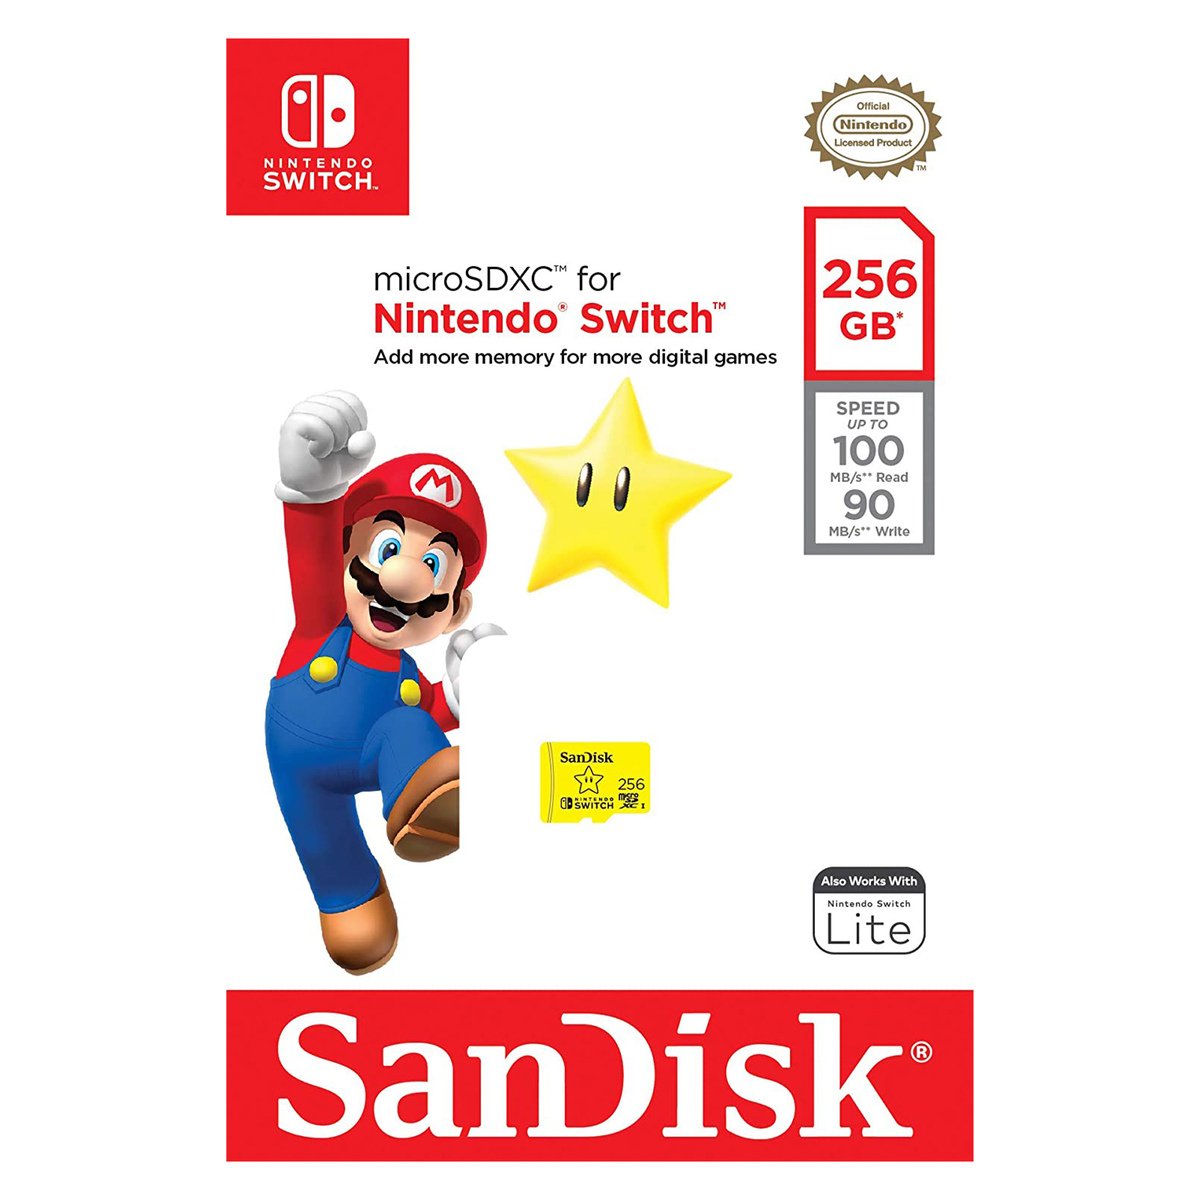 SanDisk and Nintendo Cobranded microSDXC, SQXAO, 256GB, V30, U3, C10, A1, UHS-1, 100MB/s R, 90MB/s W, 4x6, Lifetime Limited